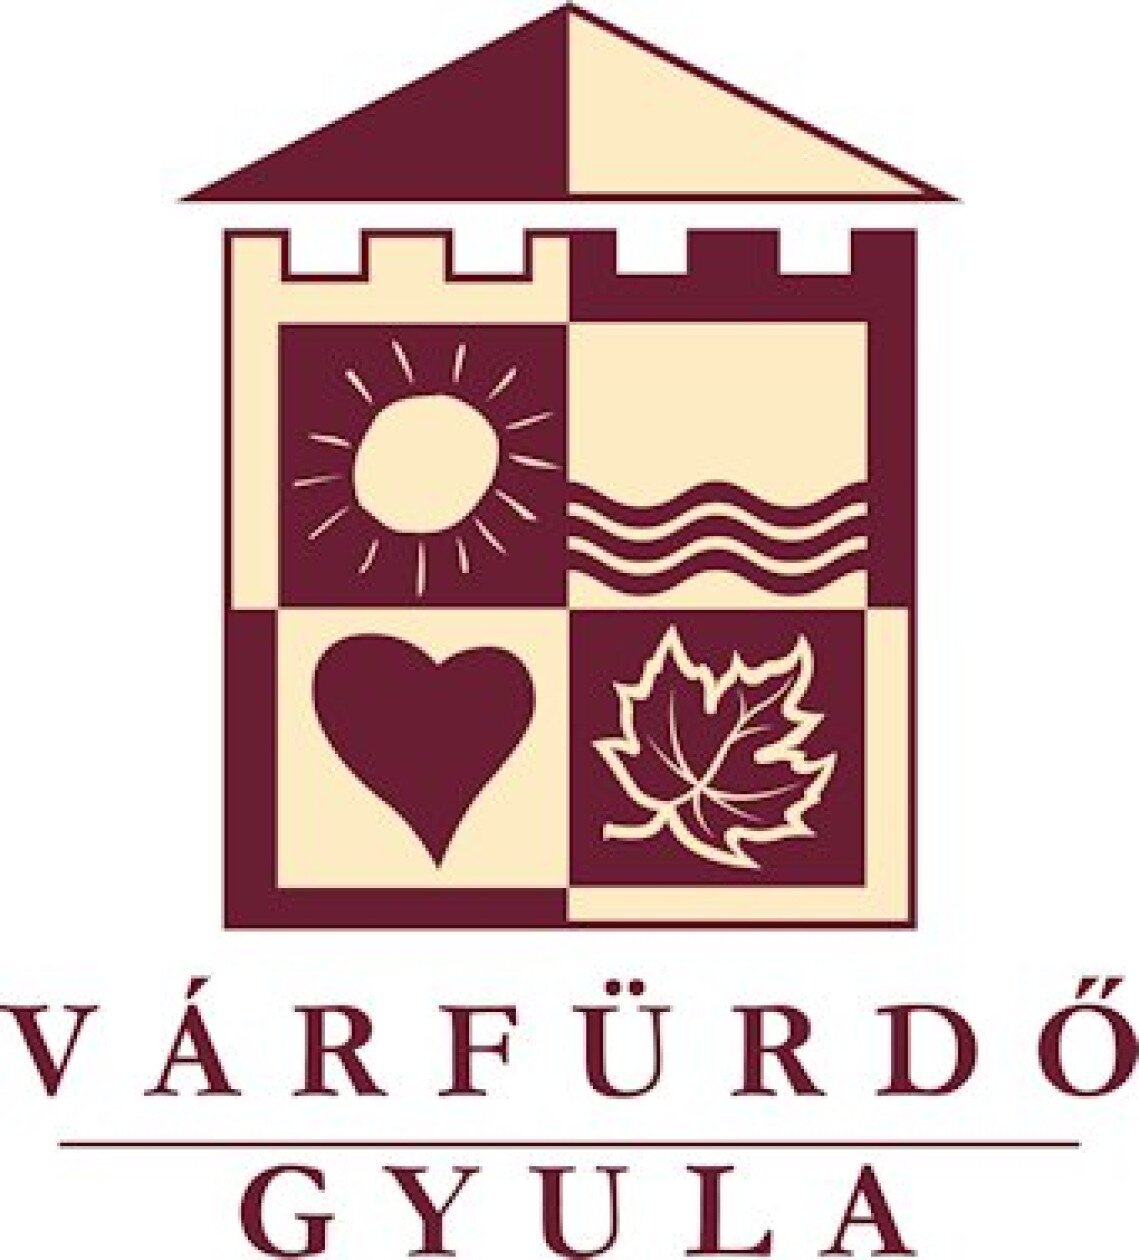 Gyulai_Vrfrd_logo.jpg